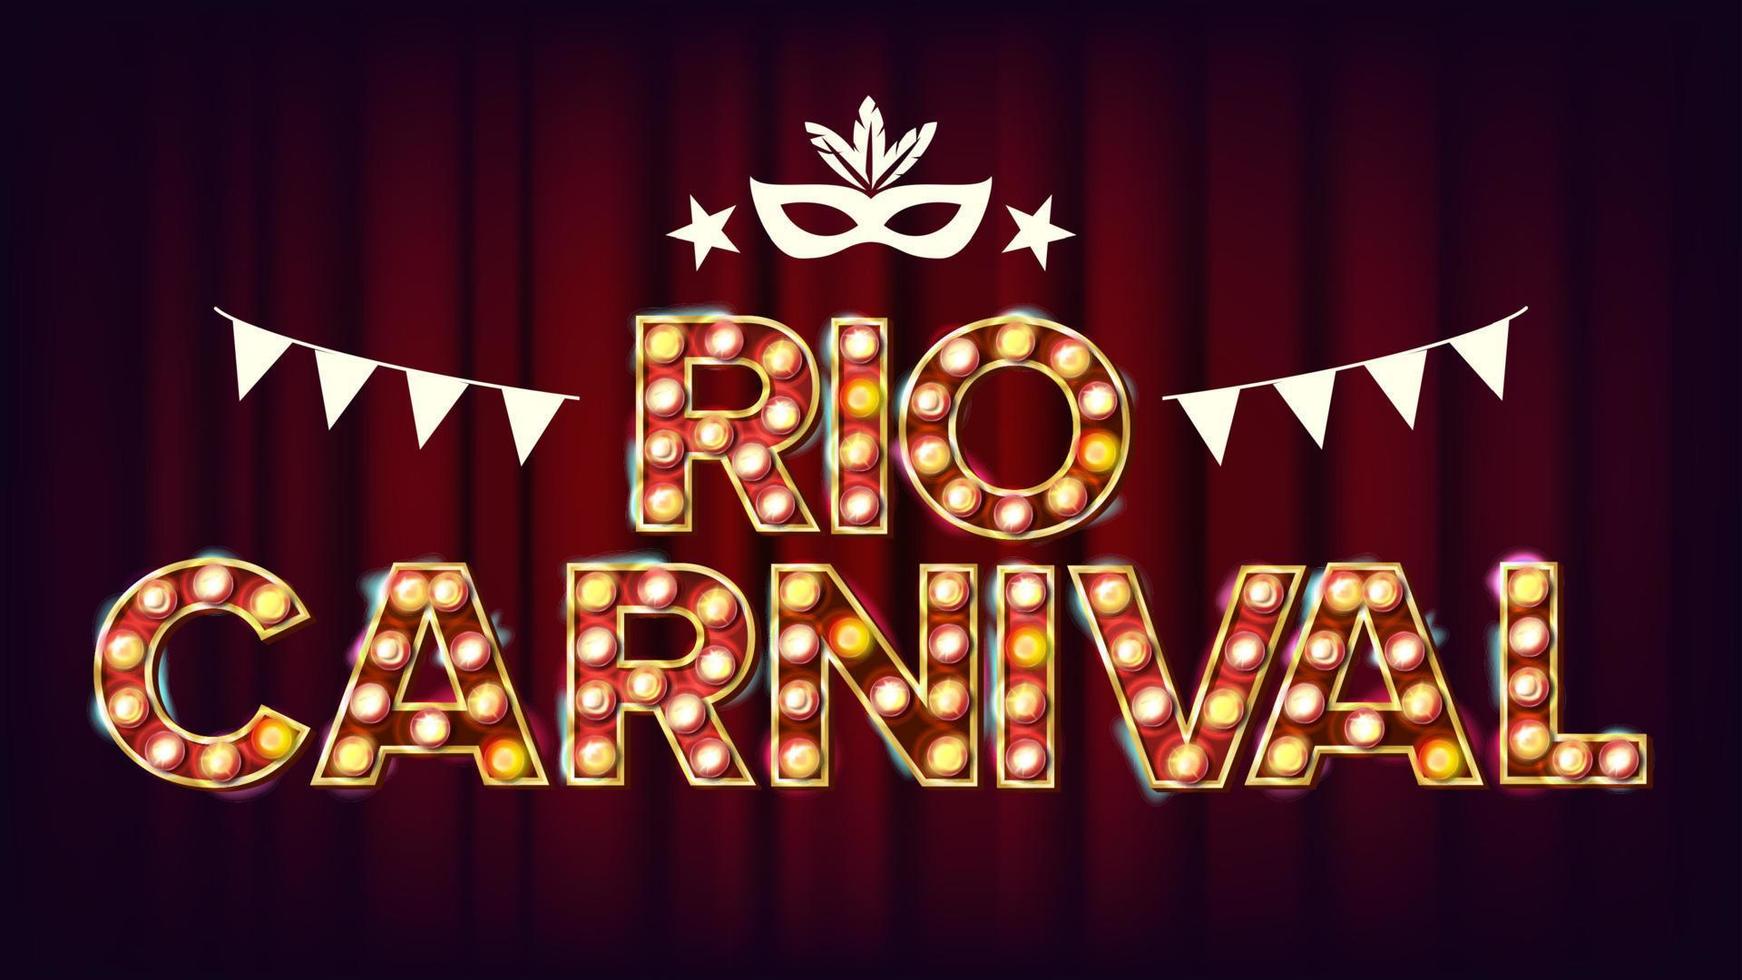 Rio carnaval achtergrond vector. carnaval wijnoogst stijl verlichte licht. voor nacht partij poster ontwerp. wijnoogst illustratie vector